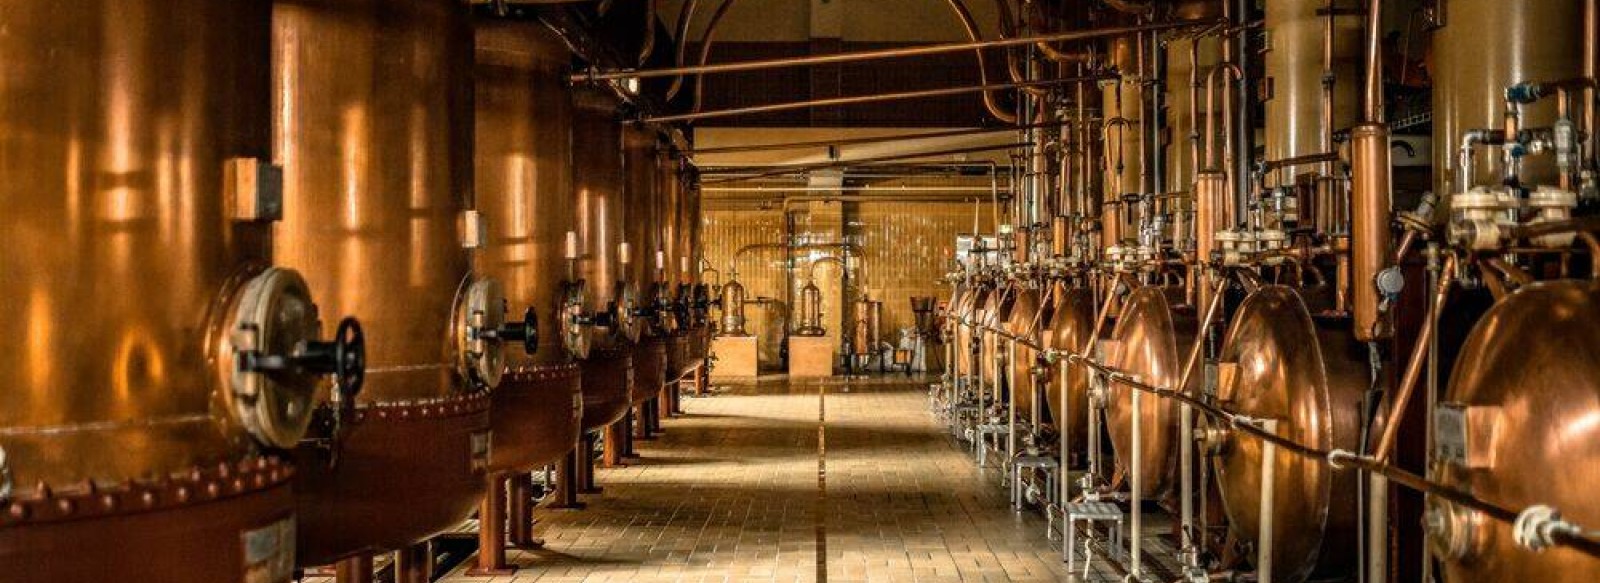 Distillerie Cointreau